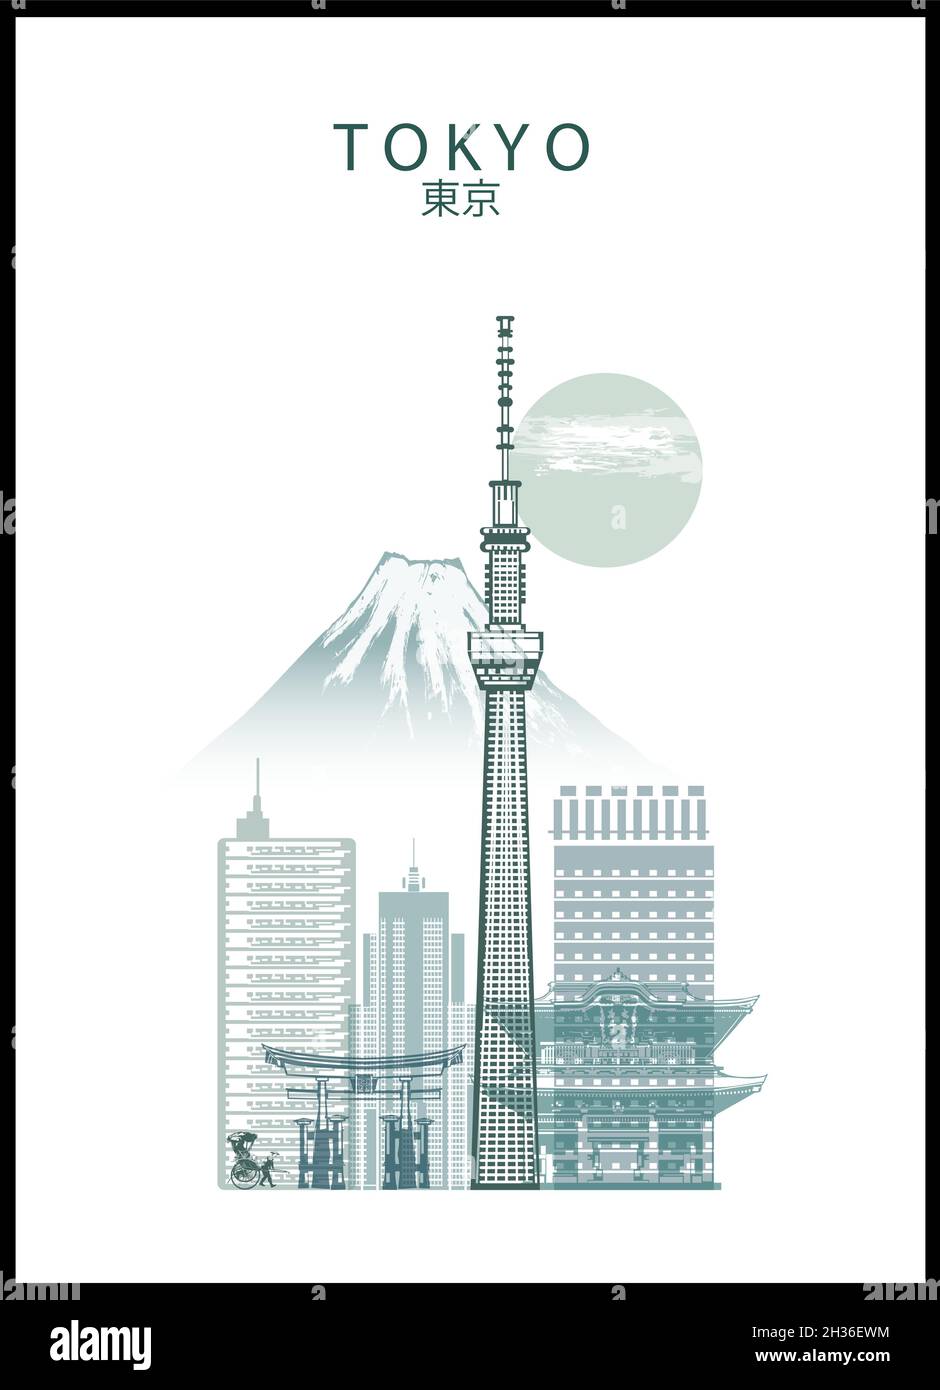 Plakat von tokio mit Fujiyama - Vektorgrafik Stock Vektor